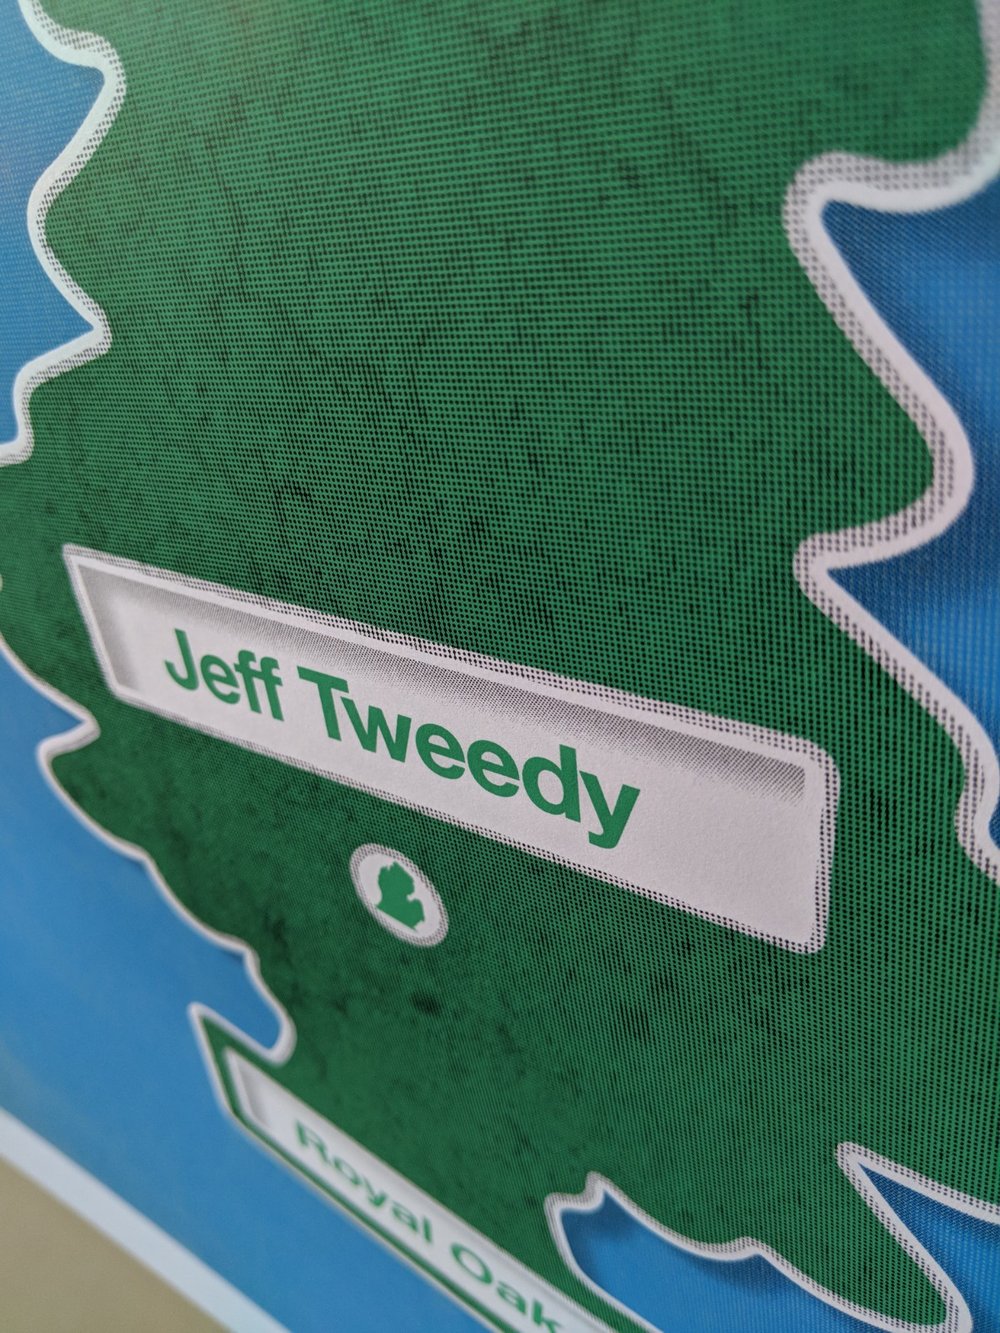 Jeff Tweedy, Royal Oak, Michigan Gig Poster